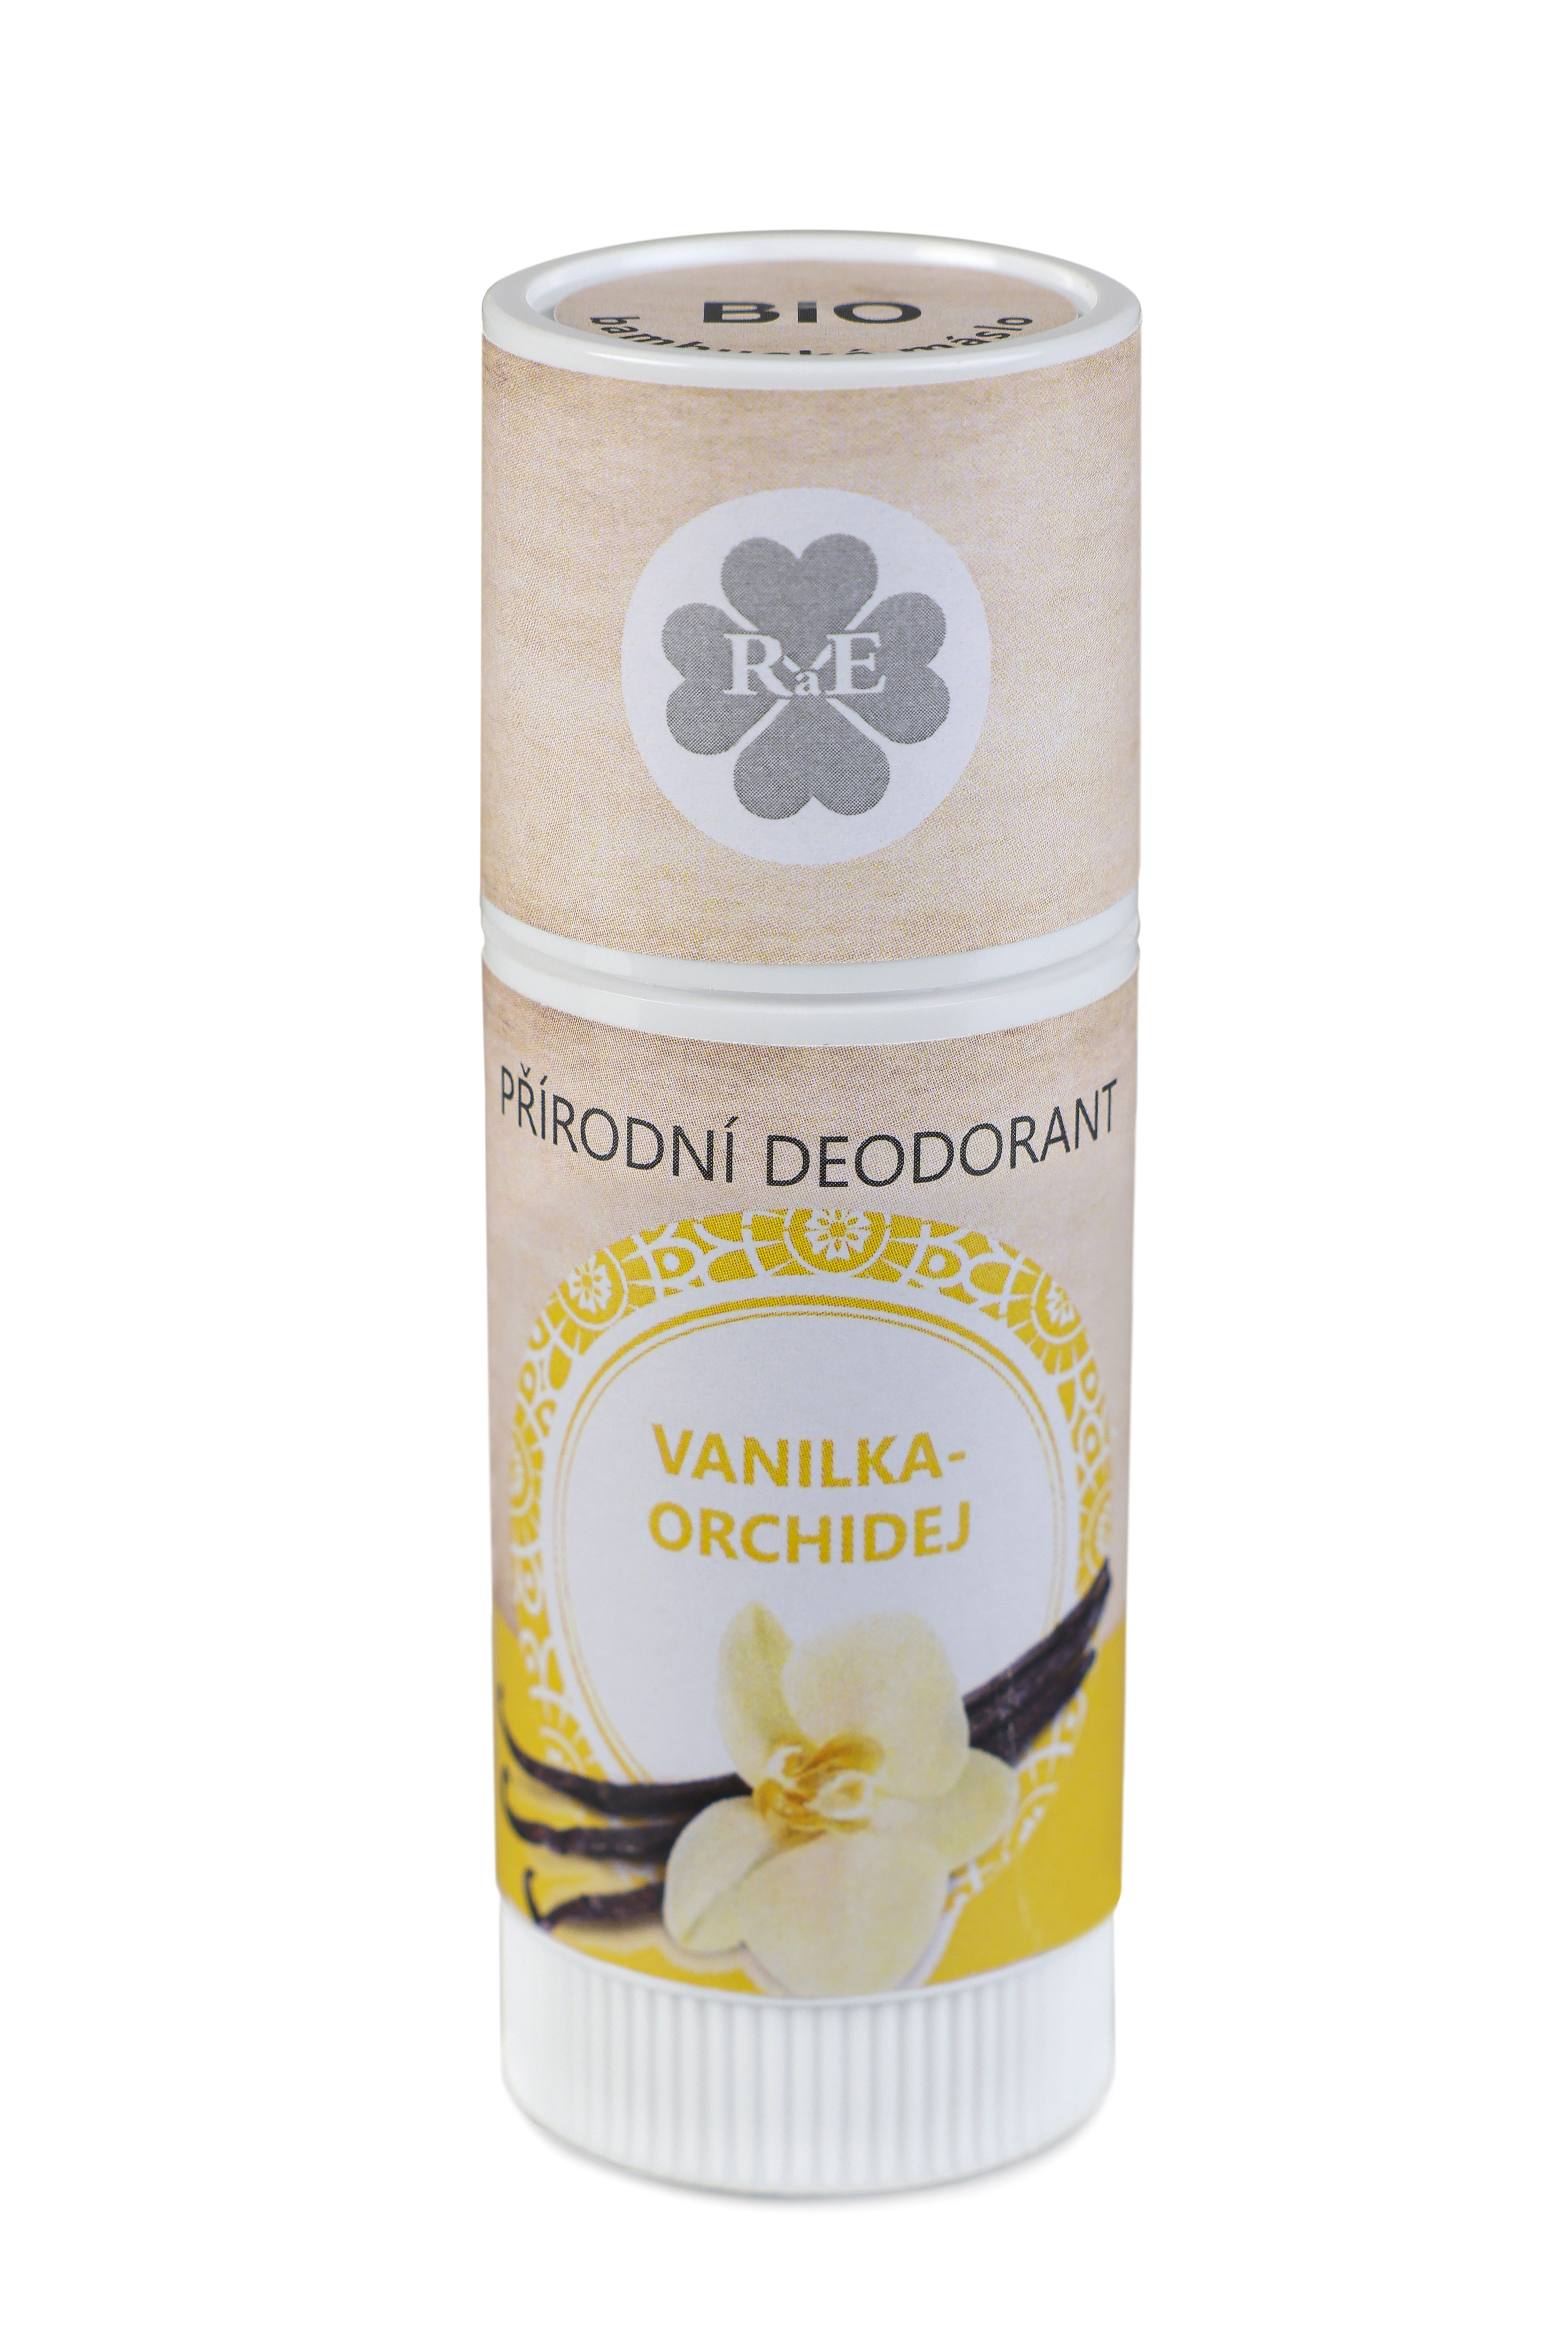 RaE Přírodní deodorant Vanilka a orchidej tuba 25ml